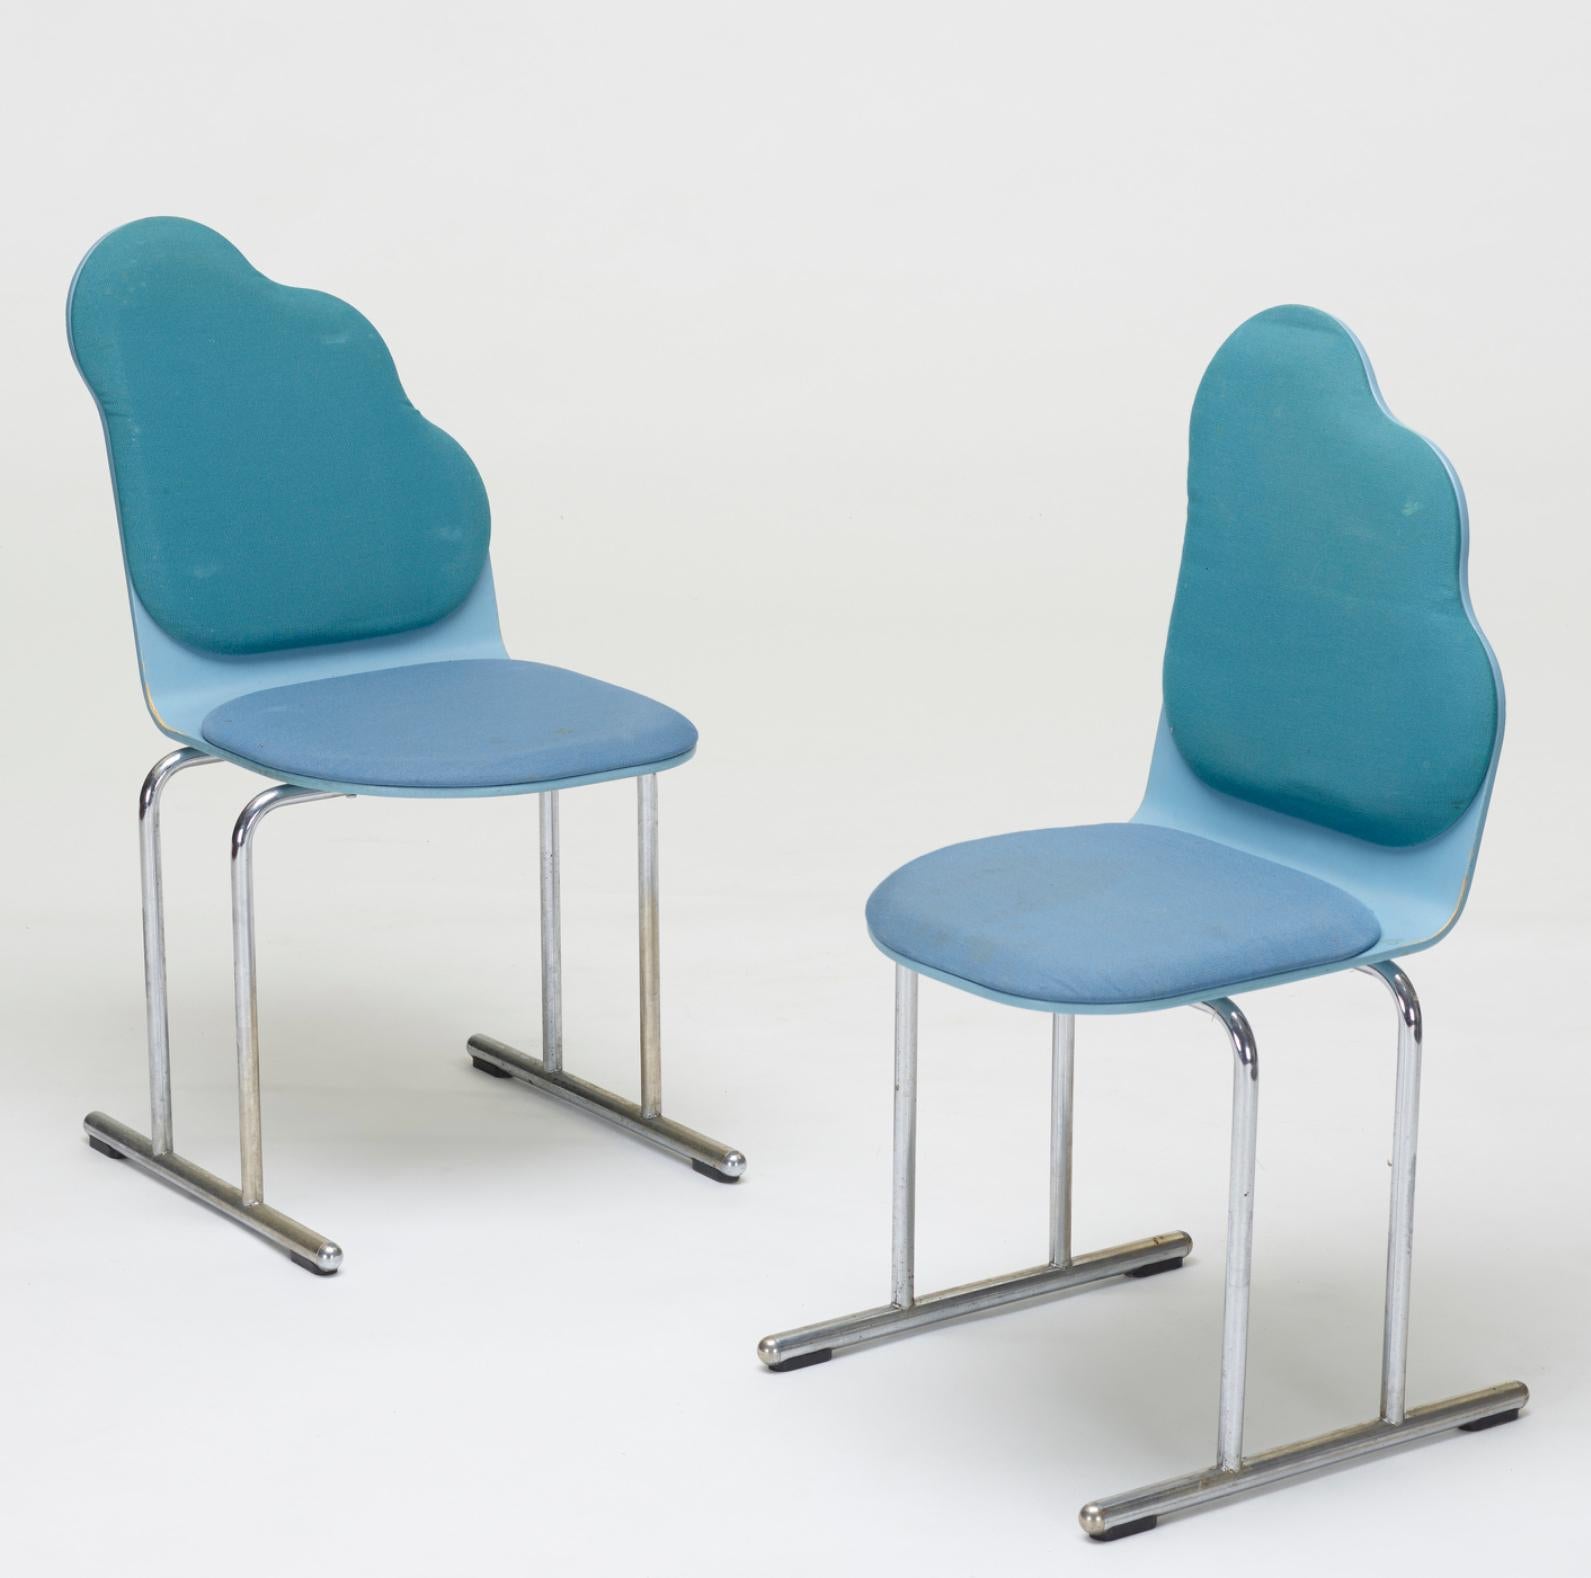 Post-Modern Yrjö Kukkapuro Cloud Chair Set of 6, Sky Blue and Teal, Avarte Finland, 1984 For Sale